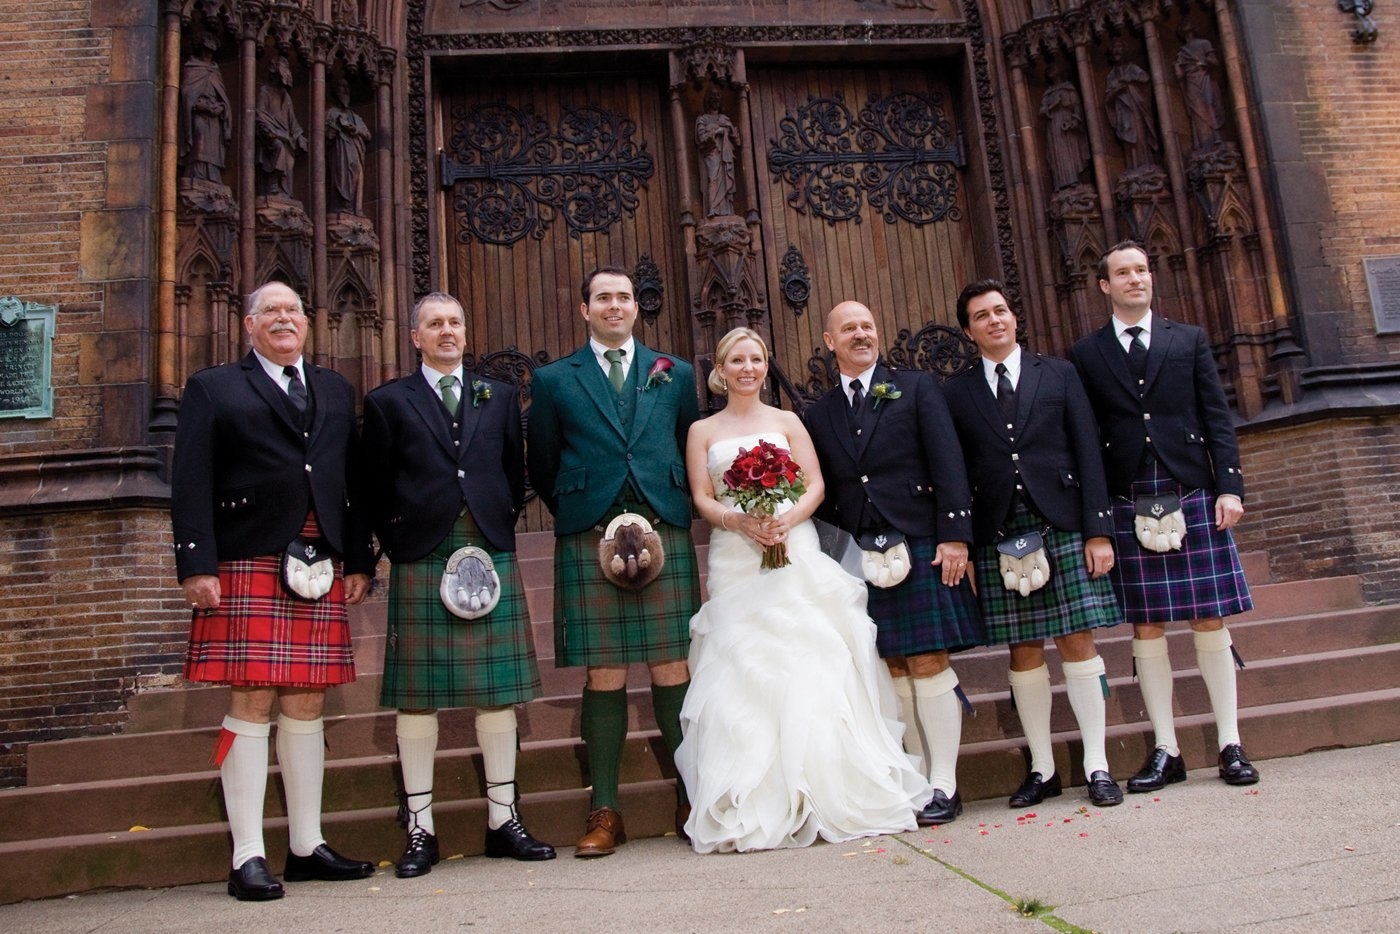 Traditional irish. Свадьба в Шотландии. Свадебная церемония в Шотландии. Свадьба в Шотландии традиции. Свадебные традиции в Шотландии.